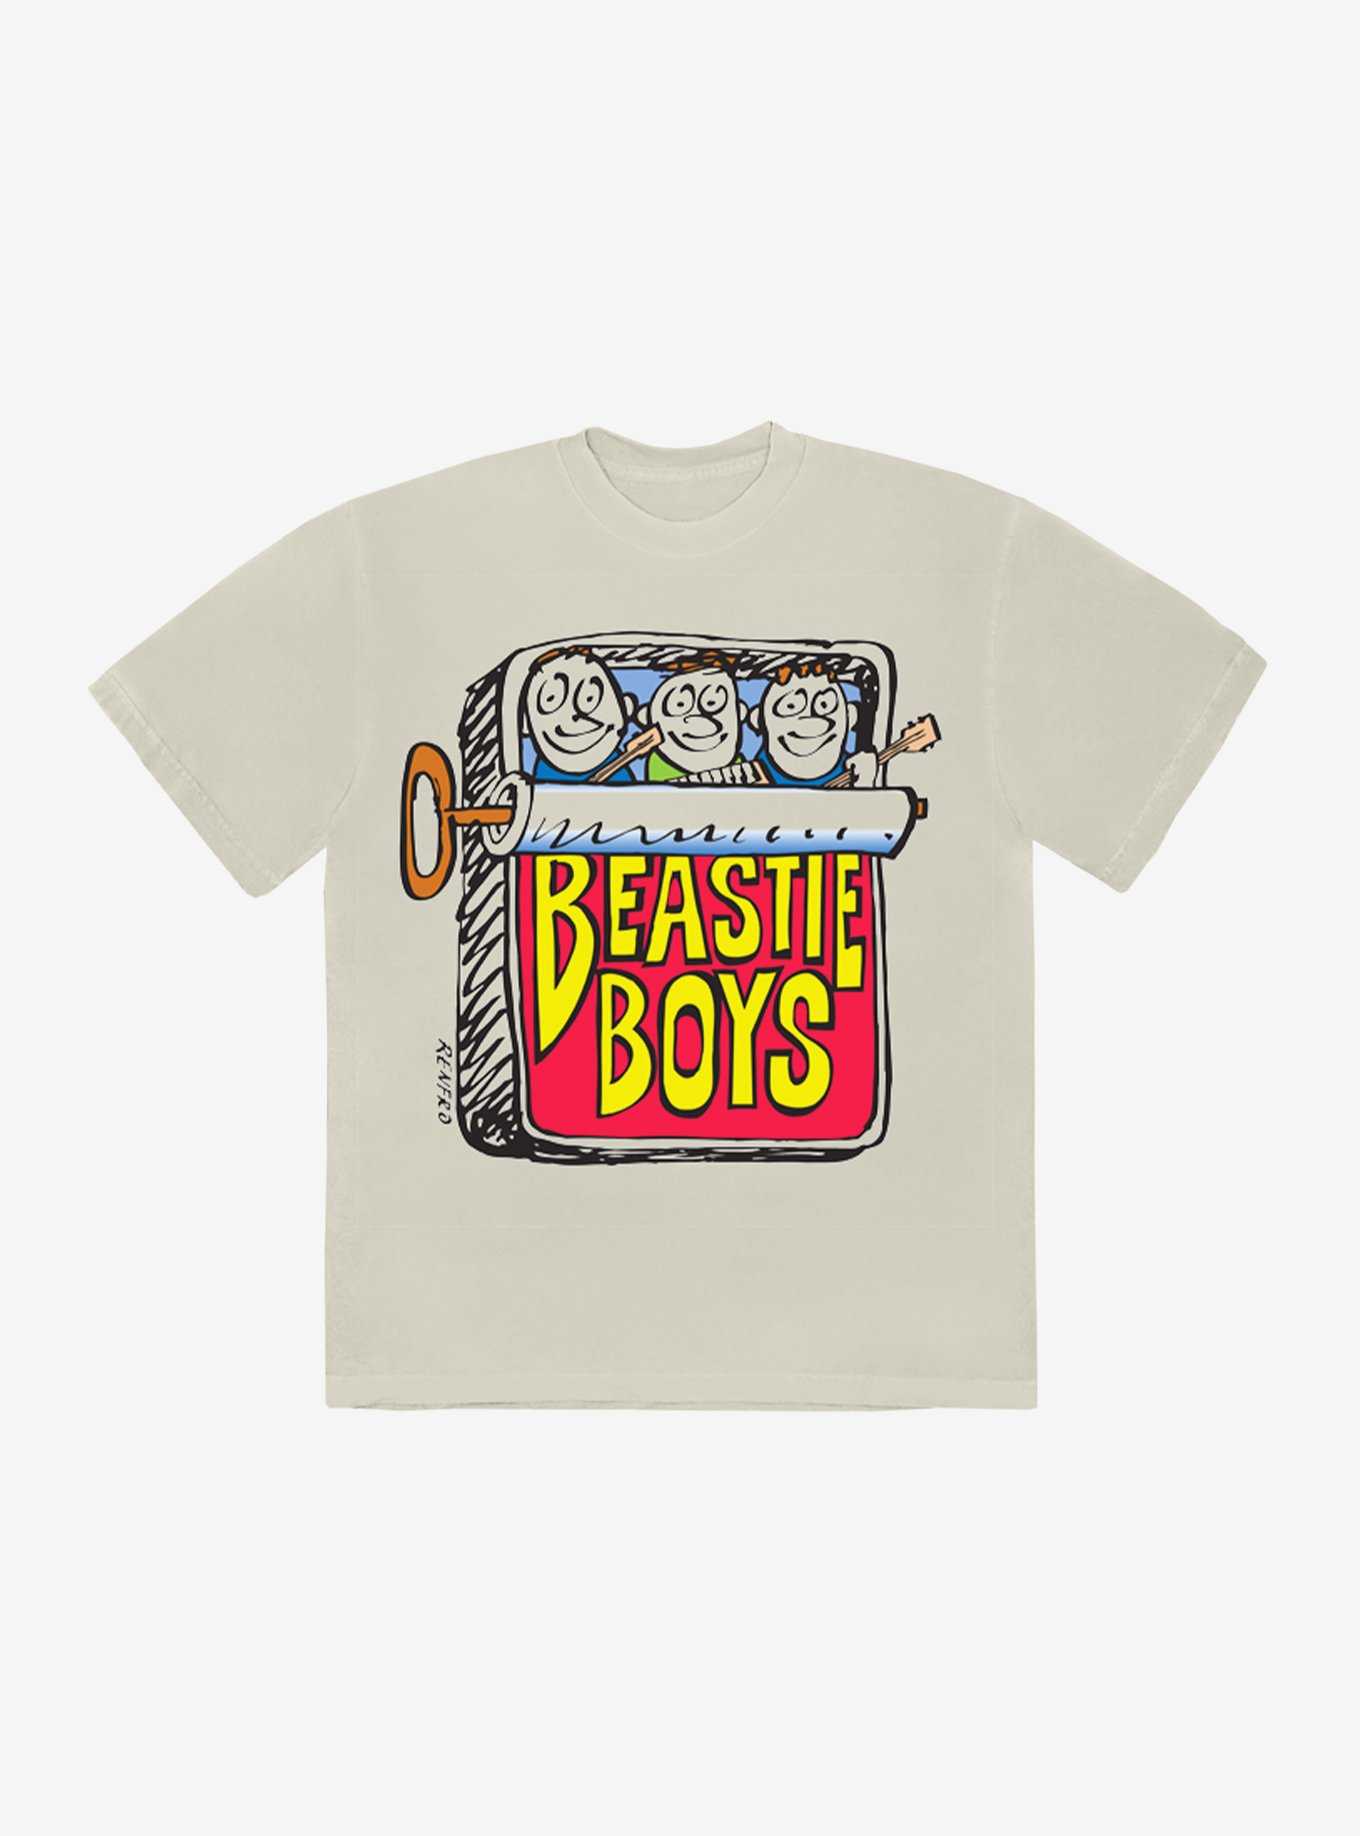 Beastie Boys Can T-Shirt, , hi-res